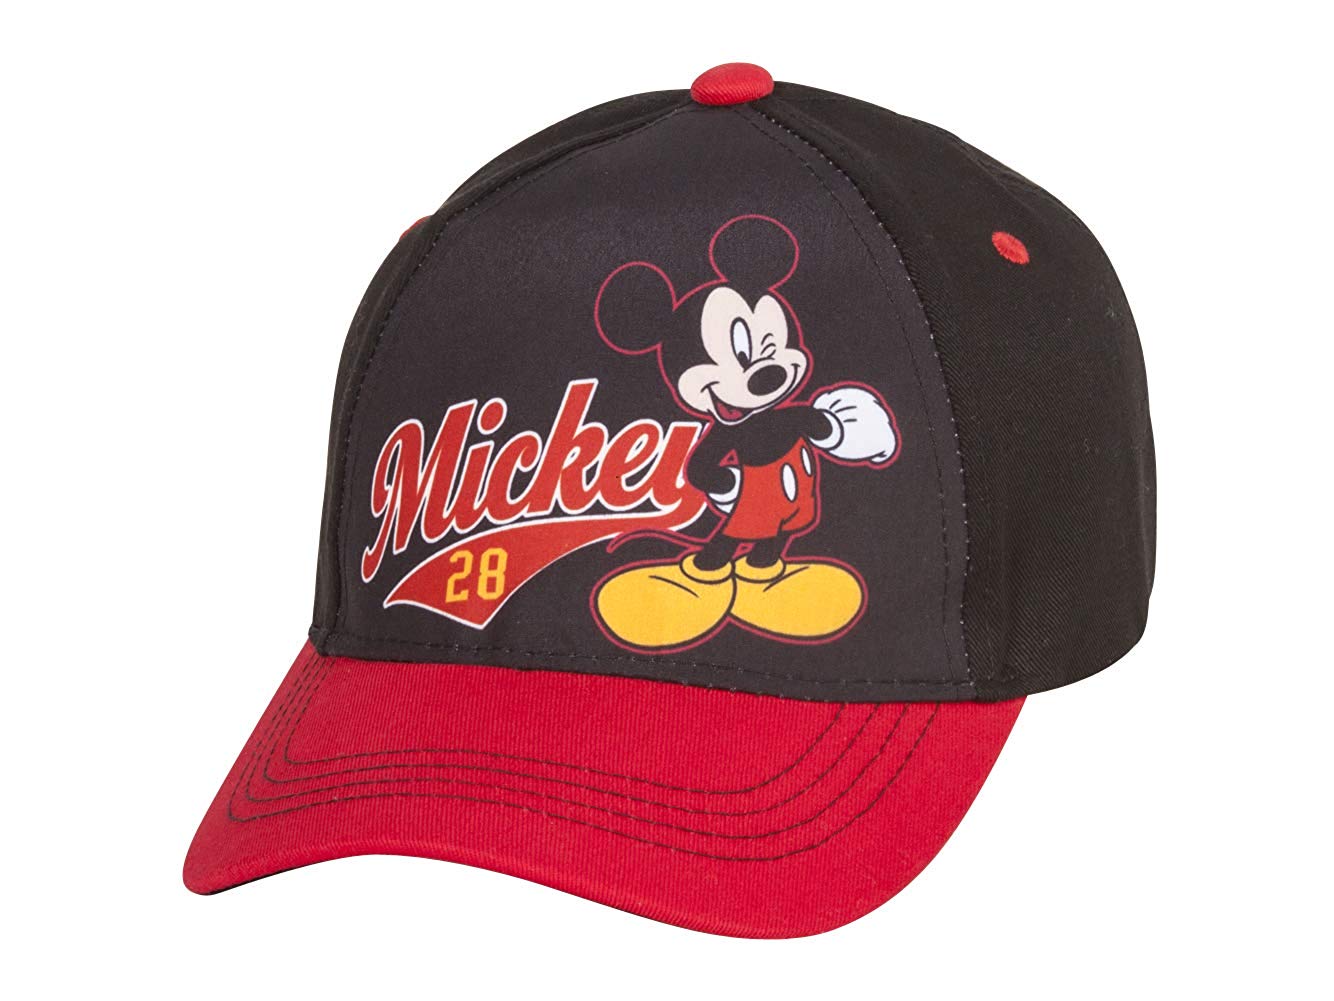 Red and Black Disney Logo - Disney Mickey Mouse 28 Baseball Cap for Little Boys